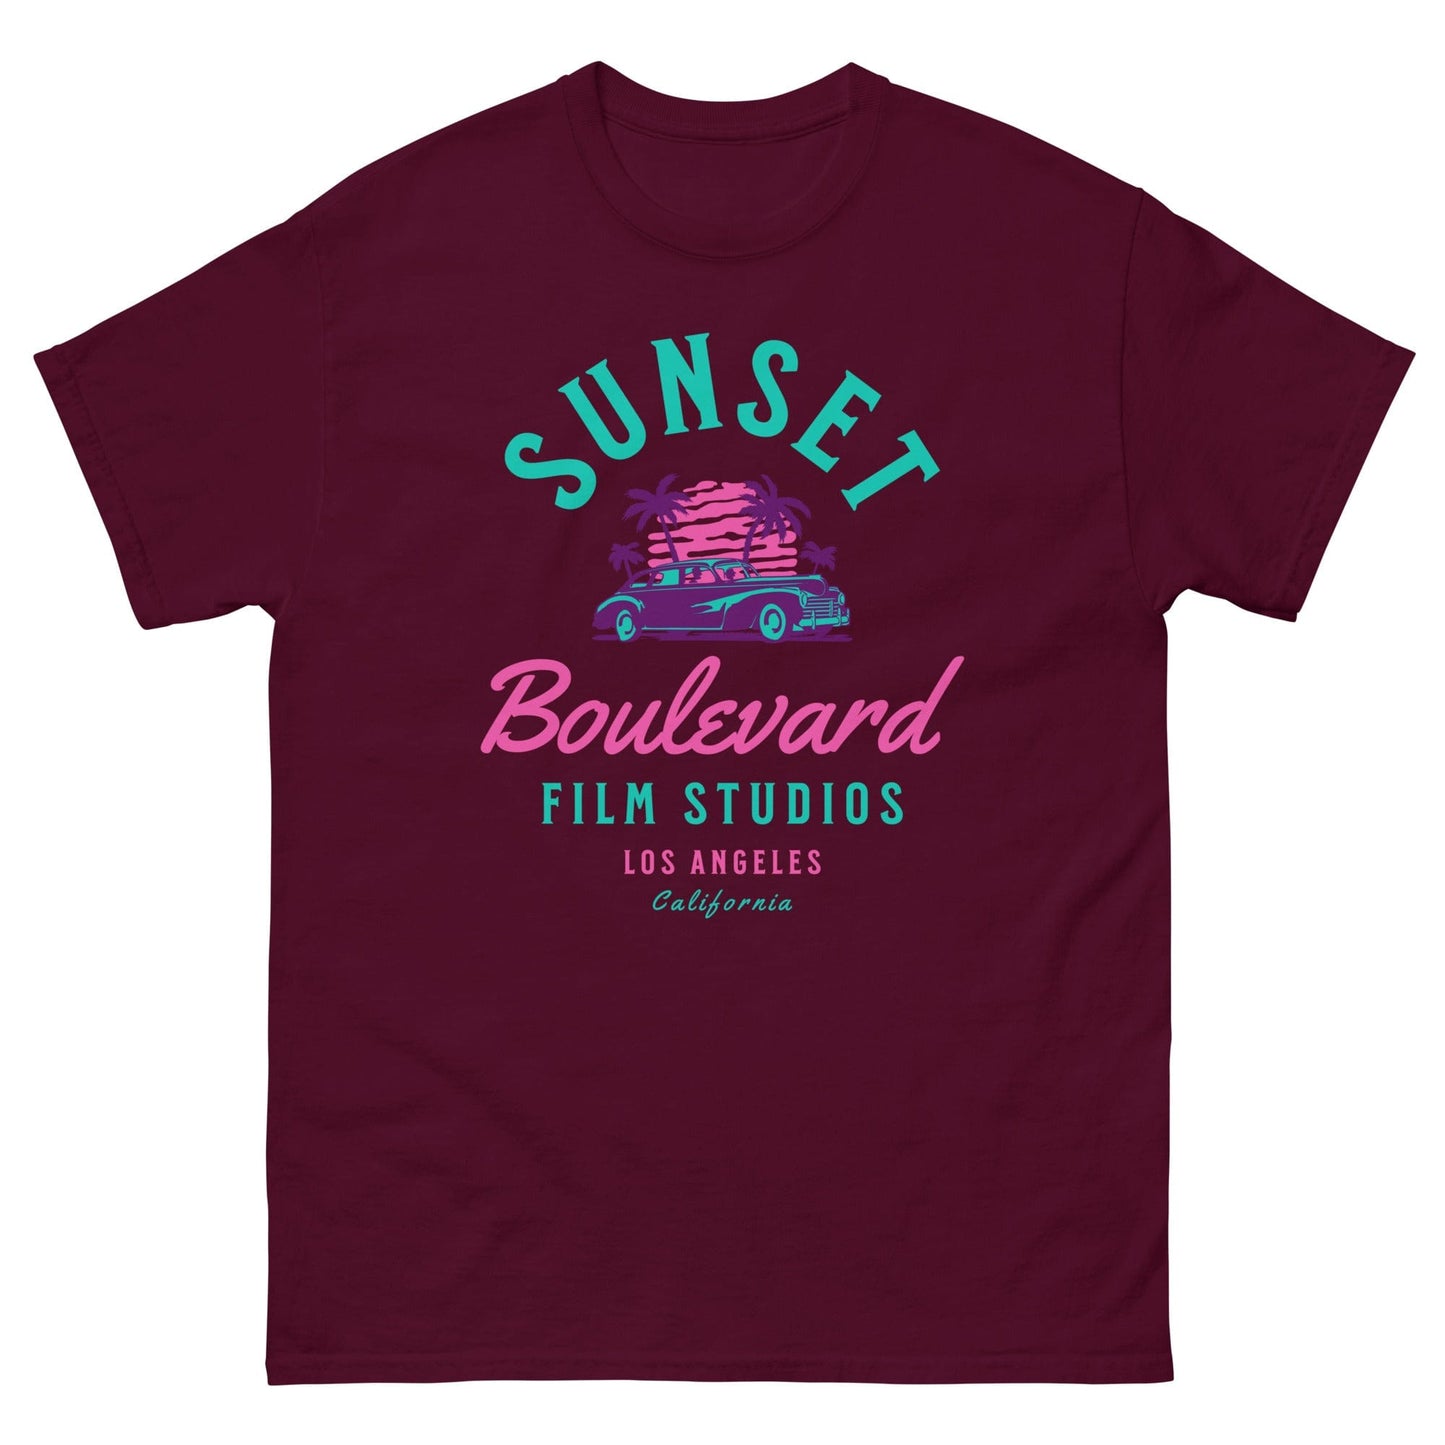 Sunset Boulevard Film Studios T-shirt Maroon / S